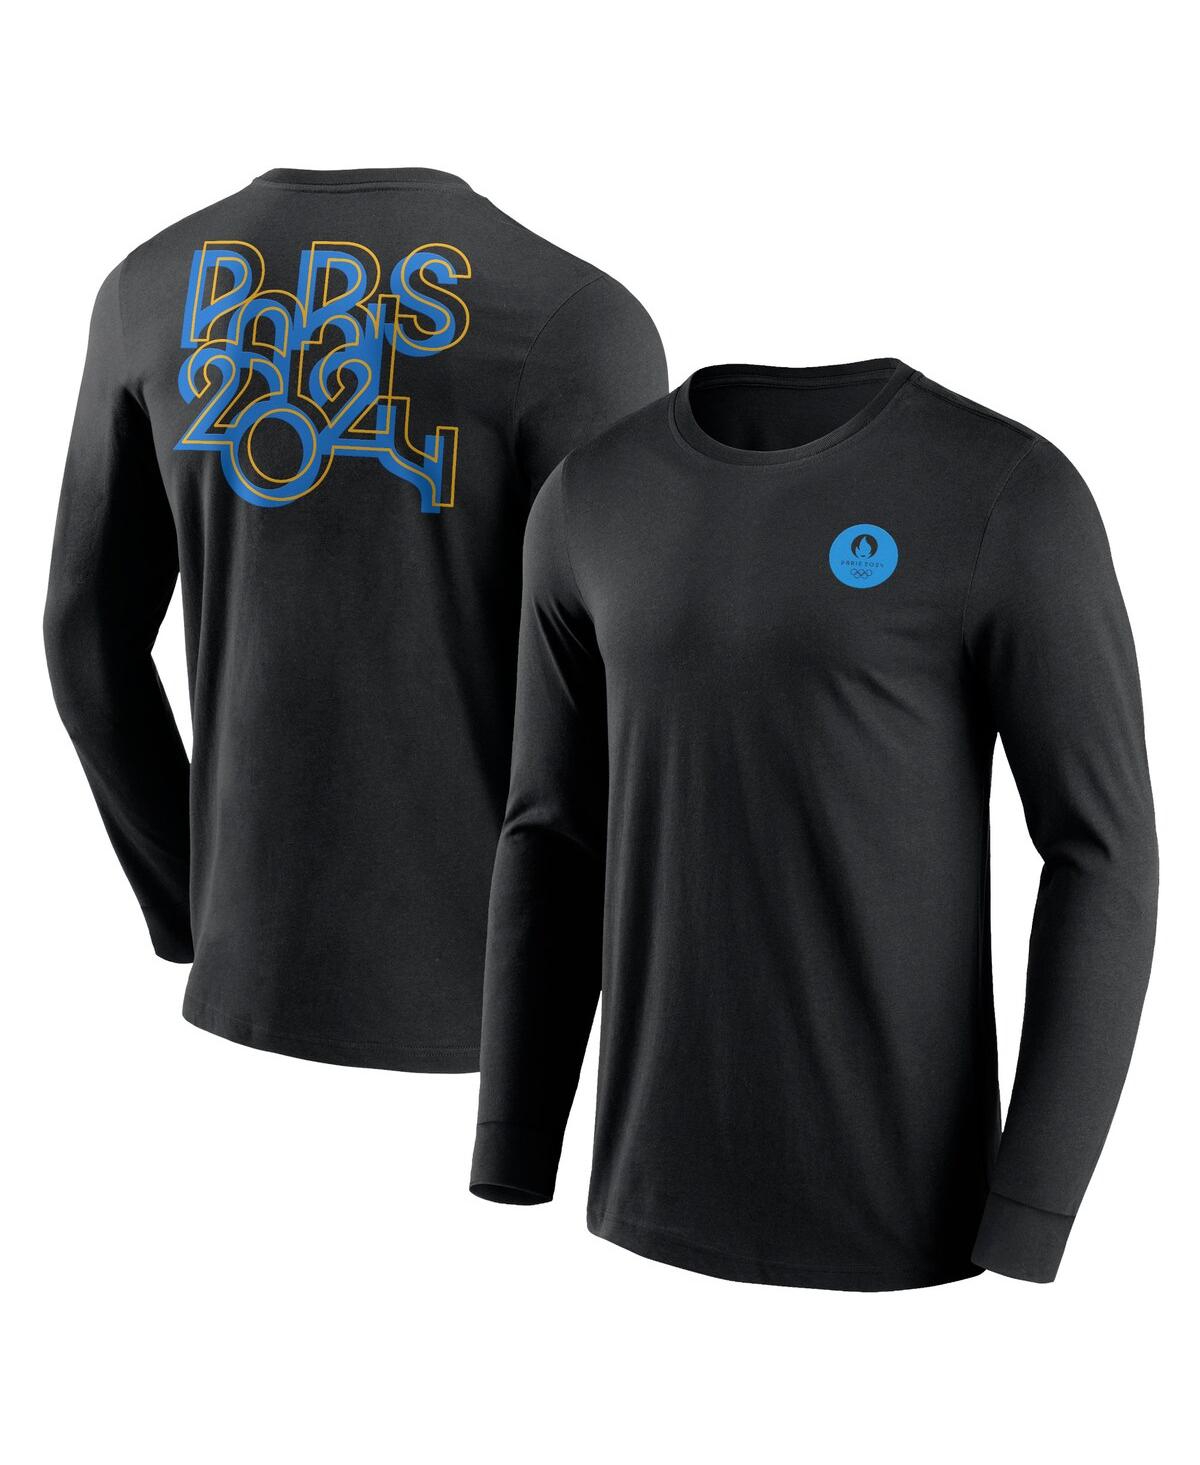 Shop Fanatics Branded Men's Black Paris 2024 Text Block Overlay Long Sleeve T-shirt